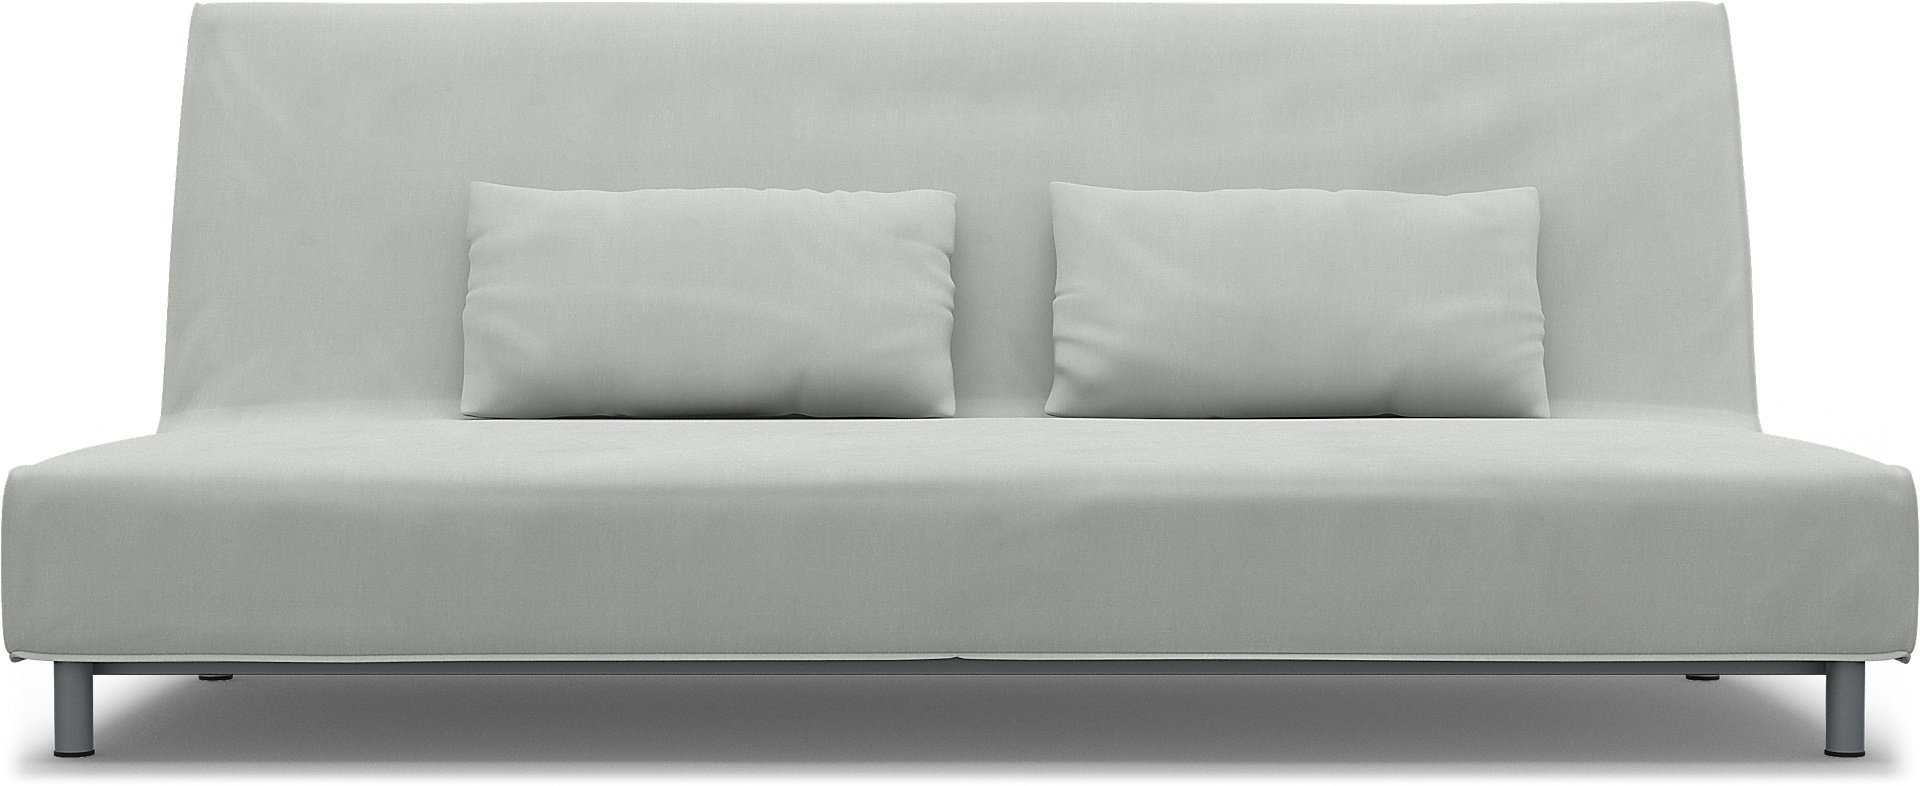 IKEA - Beddinge Sofa Bed Cover, Silver Grey, Linen - Bemz